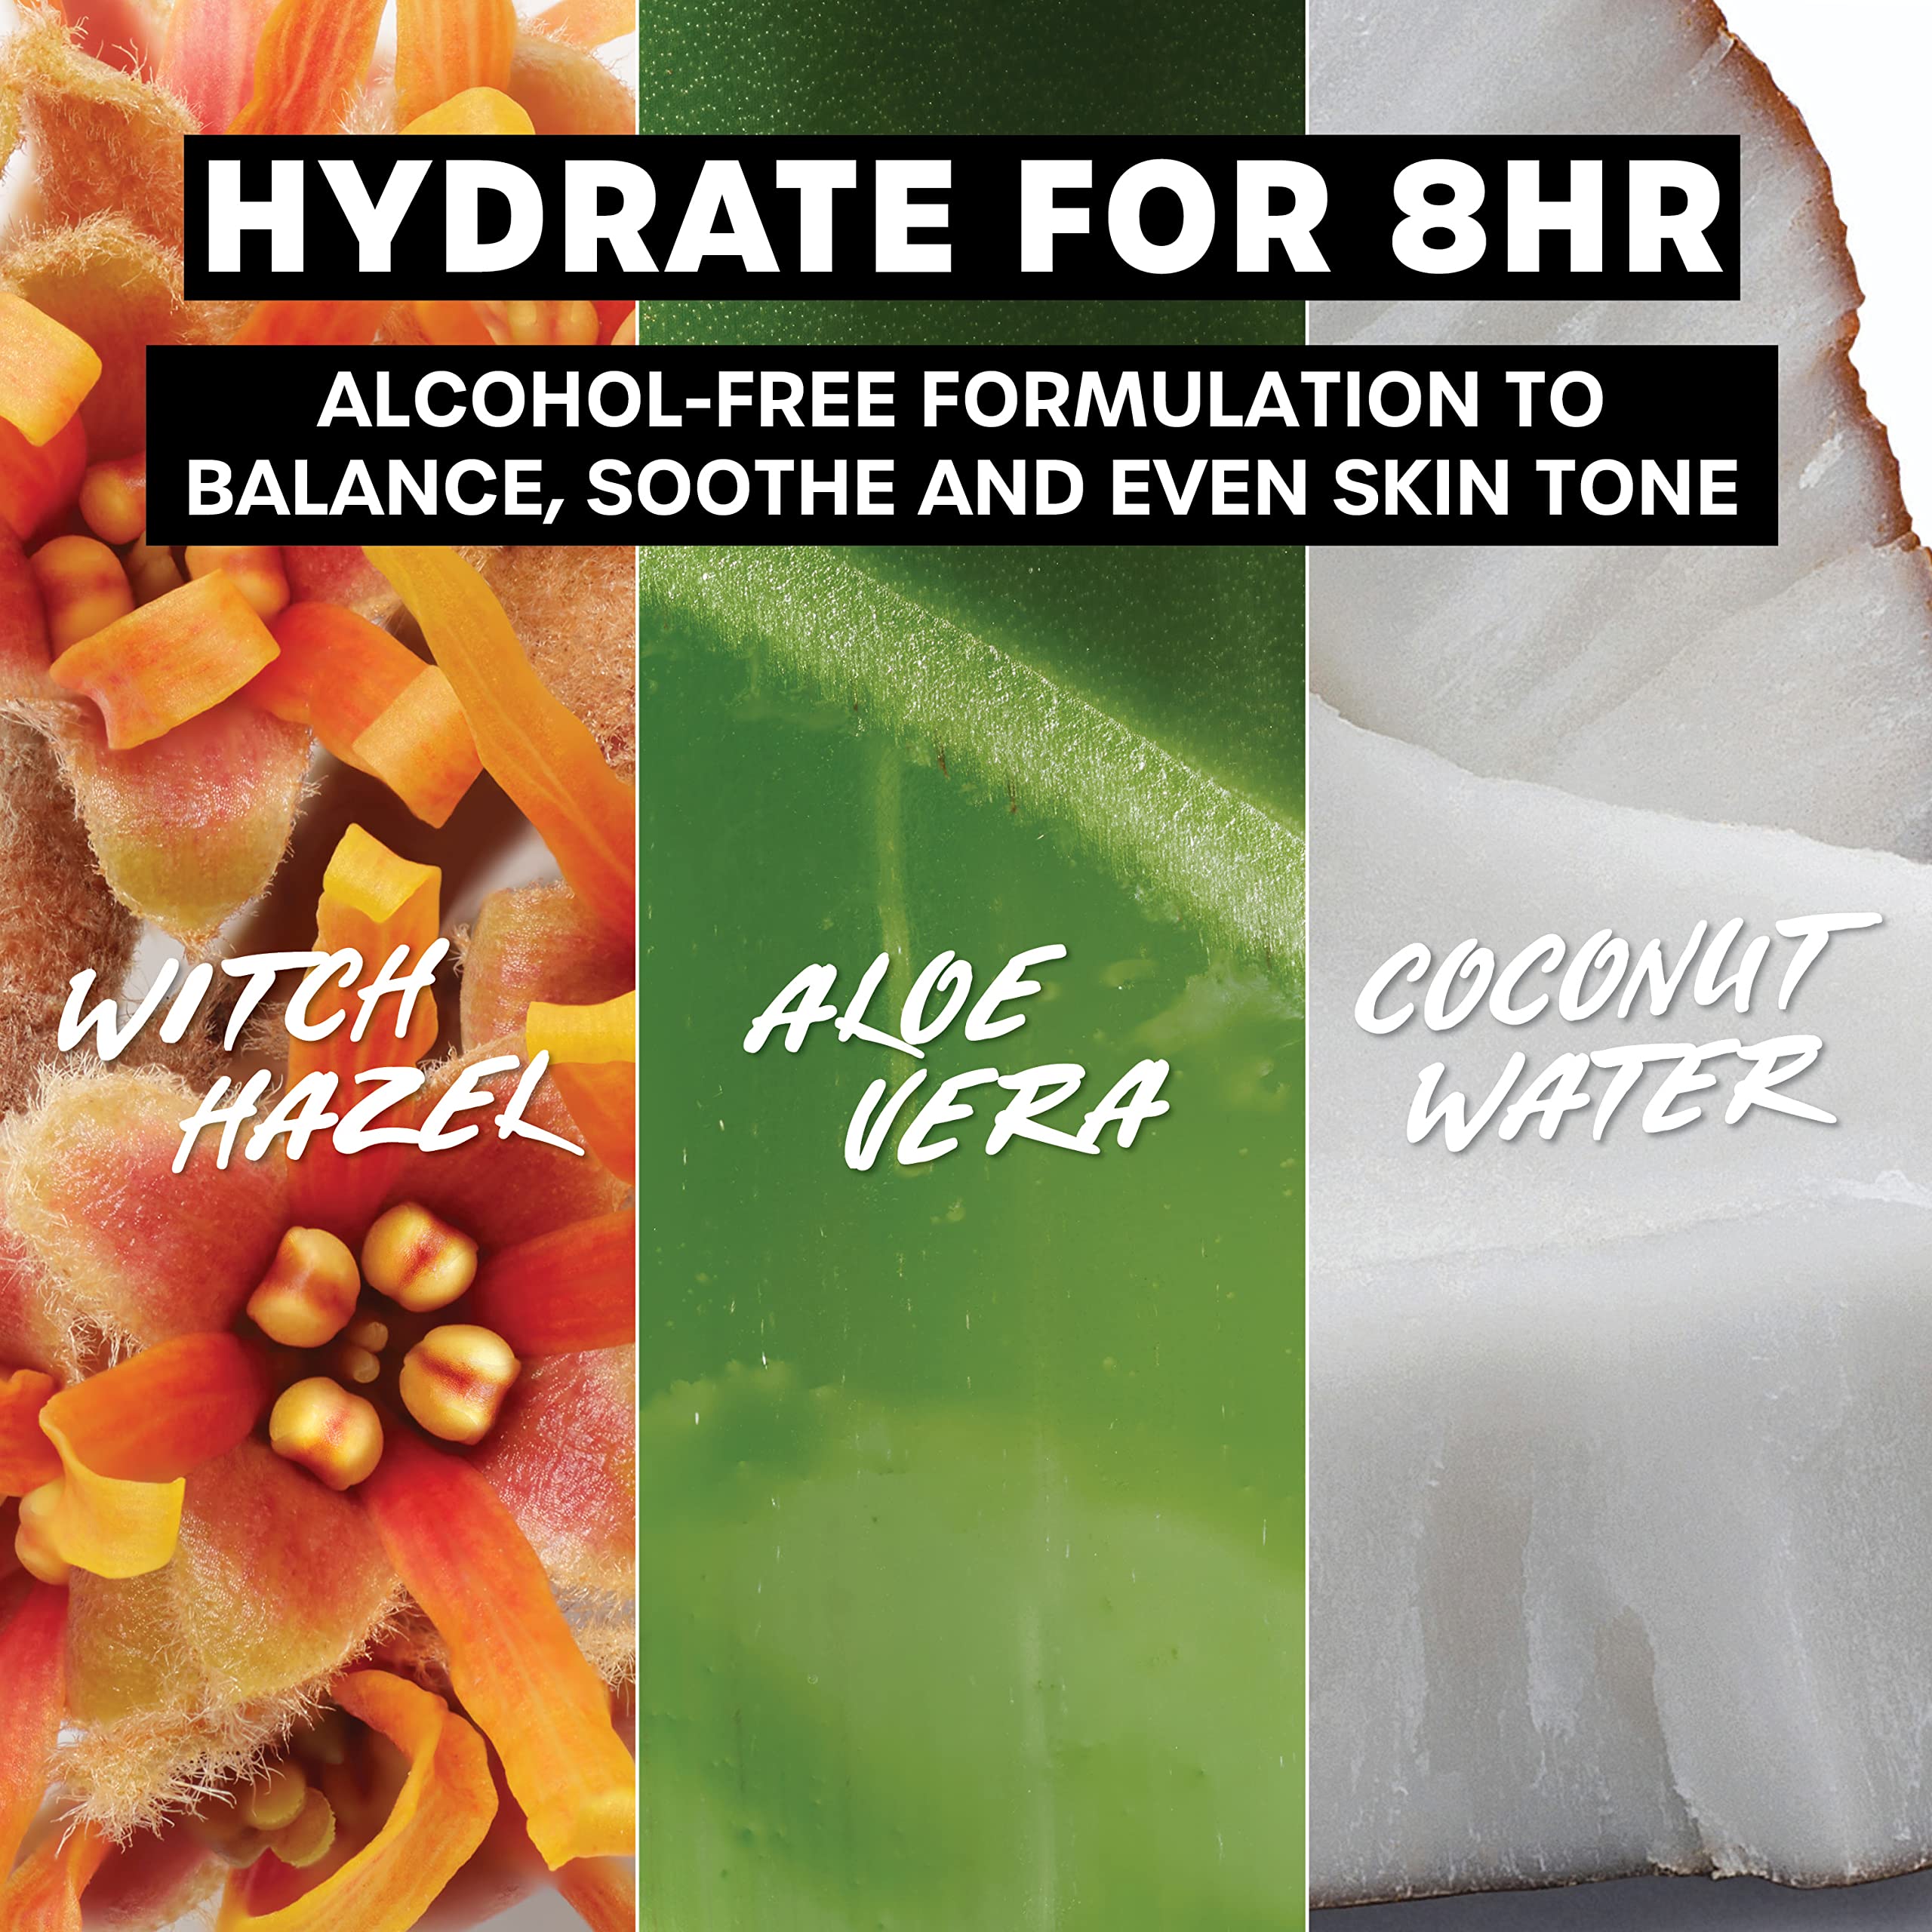 THAYERS Alcohol-Free, Hydrating Coconut Water Witch Hazel Facial Toner with Aloe Vera Formula, 12 oz